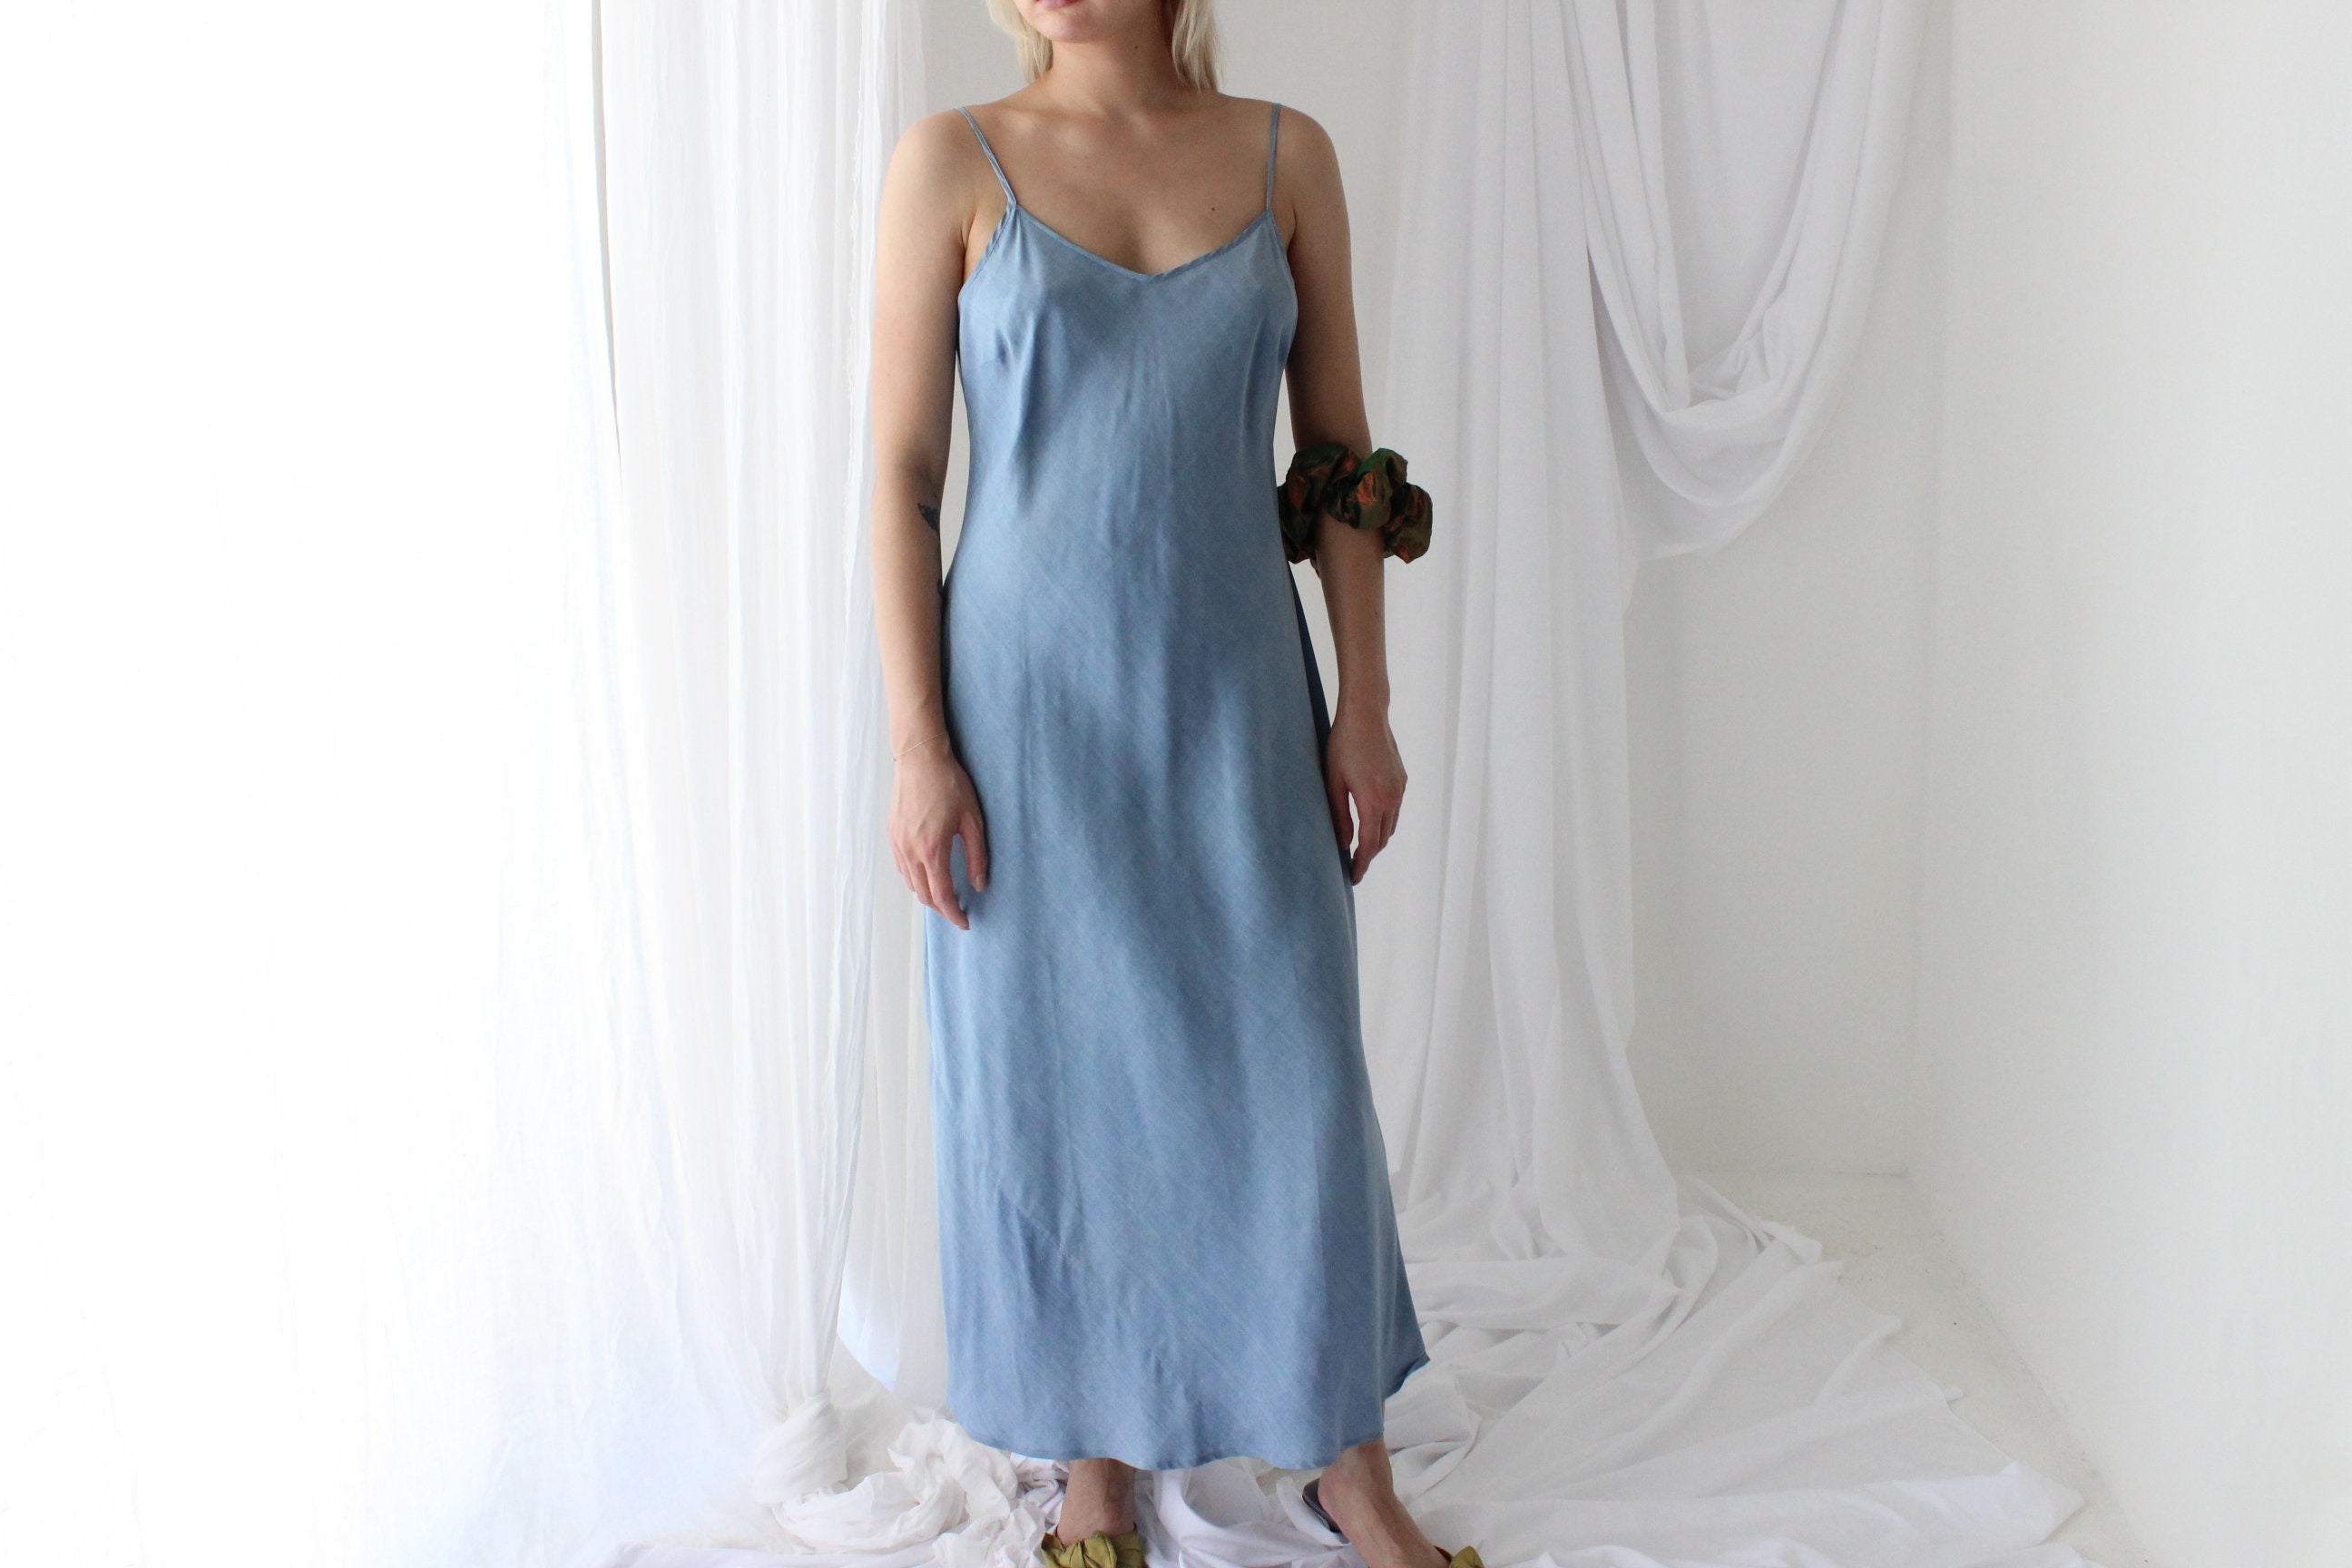 90s Pure Silk Bias Cut Slip Dress in "Lightwash Denim"